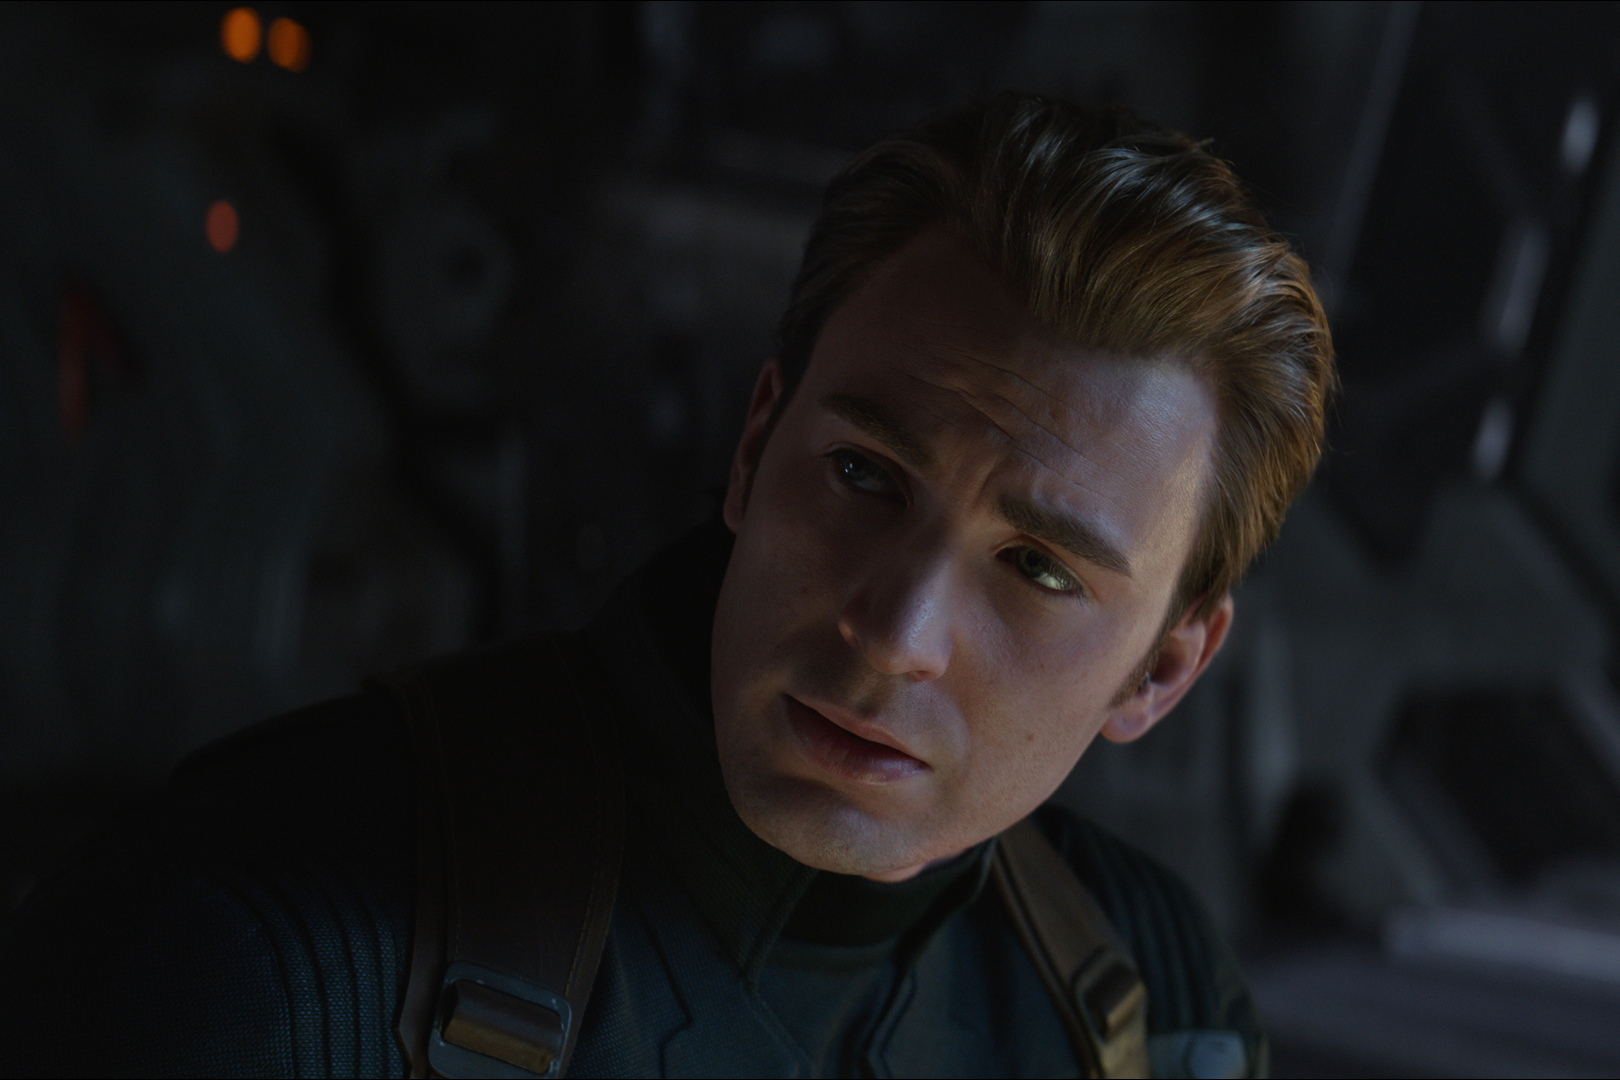 《Avengers: Endgame》编剧解释 Steve Rogers 传位于 Falcon 的原因